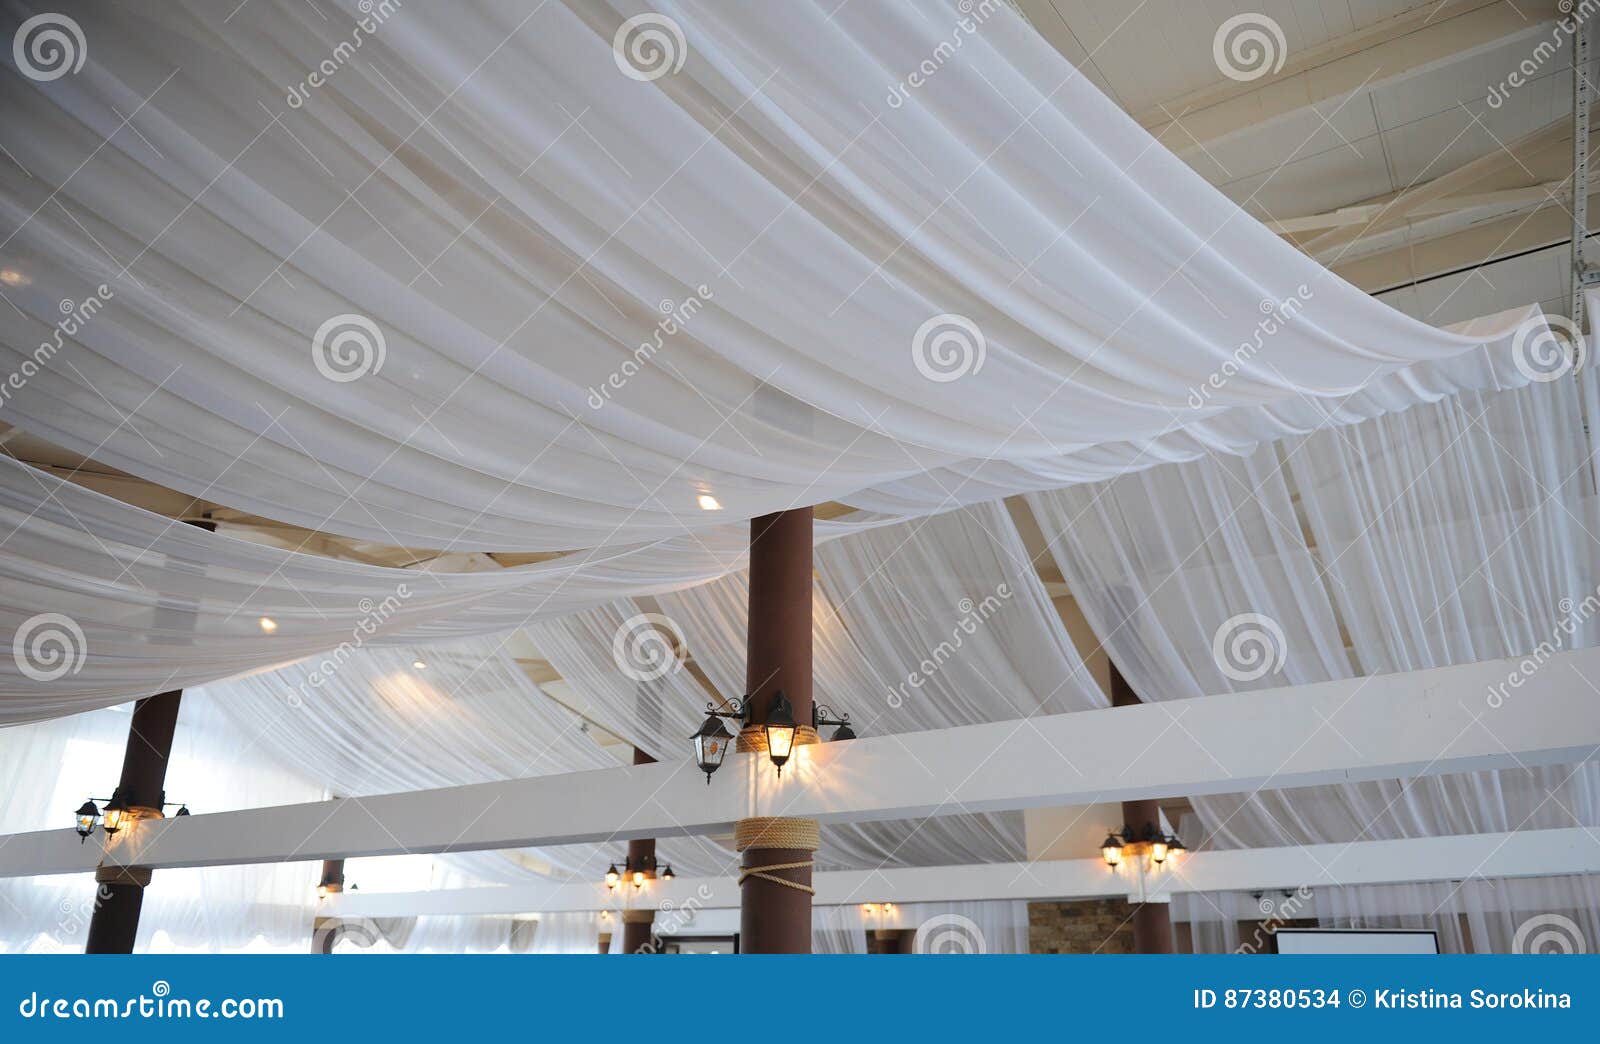 Fabric Drape On The Restaurant Ceiling Bright Interior